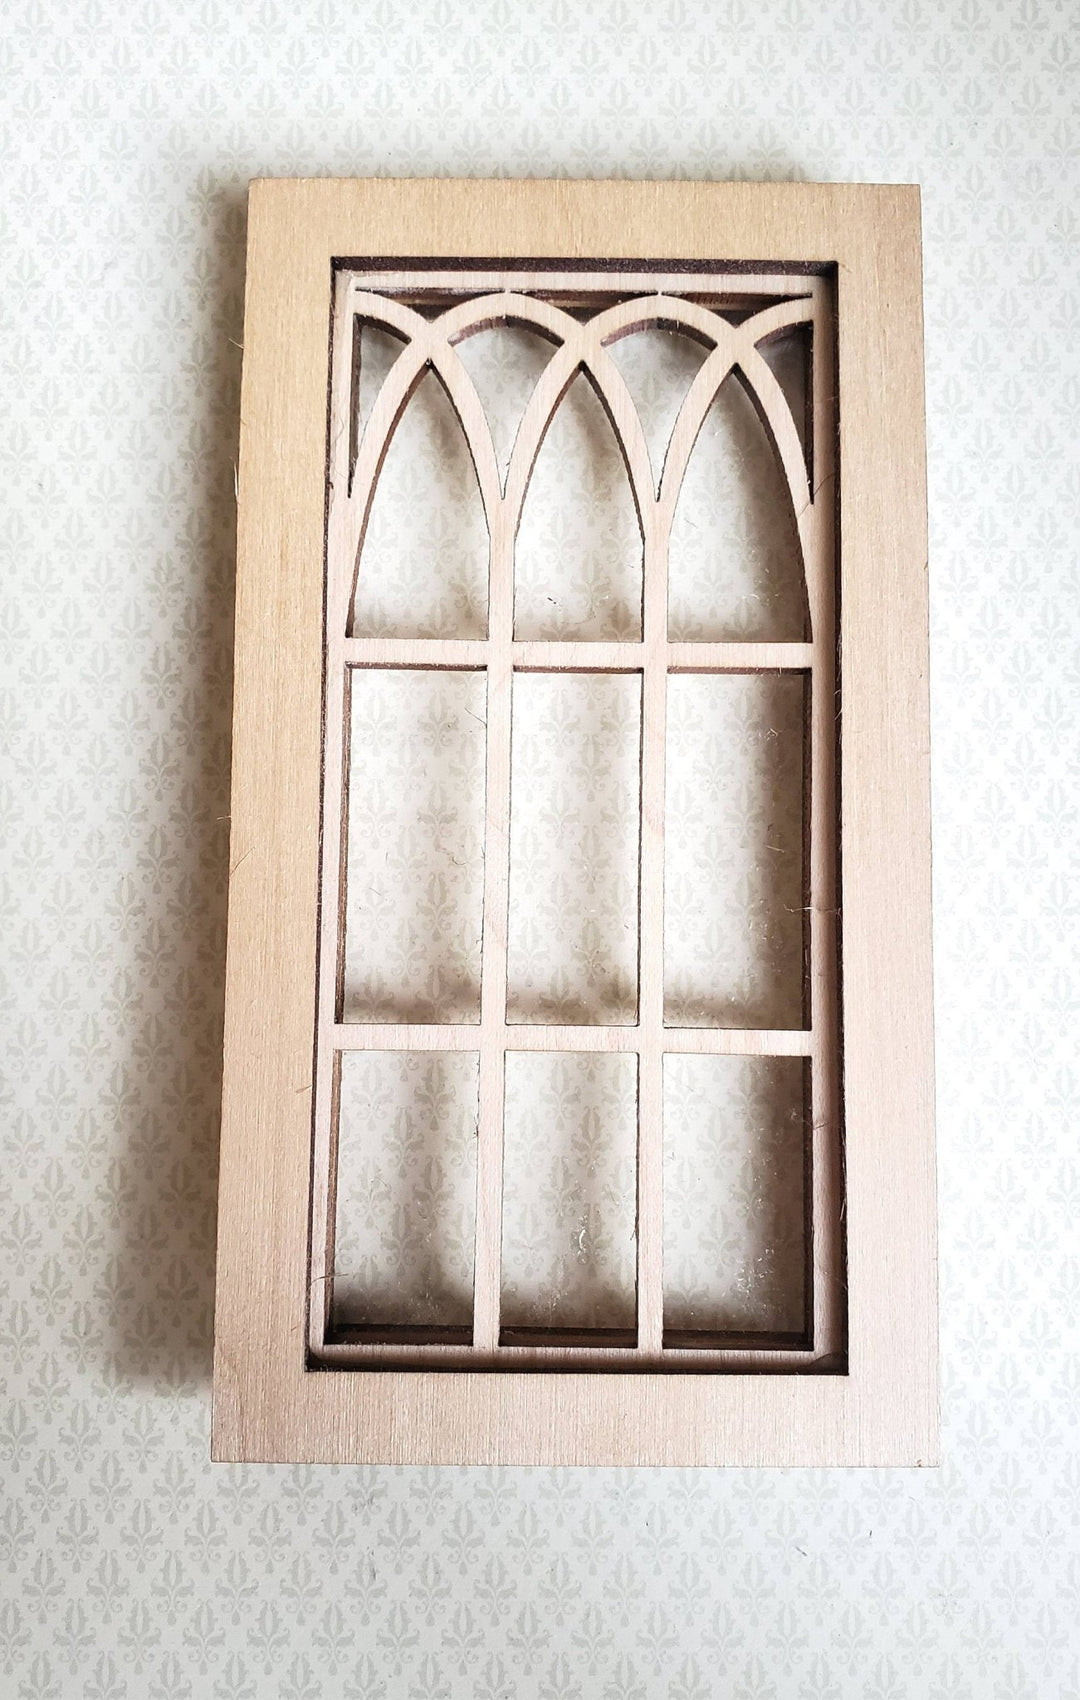 Dollhouse Miniature Window Tudor Gothic Arch Style Wood 1:12 Scale - Miniature Crush